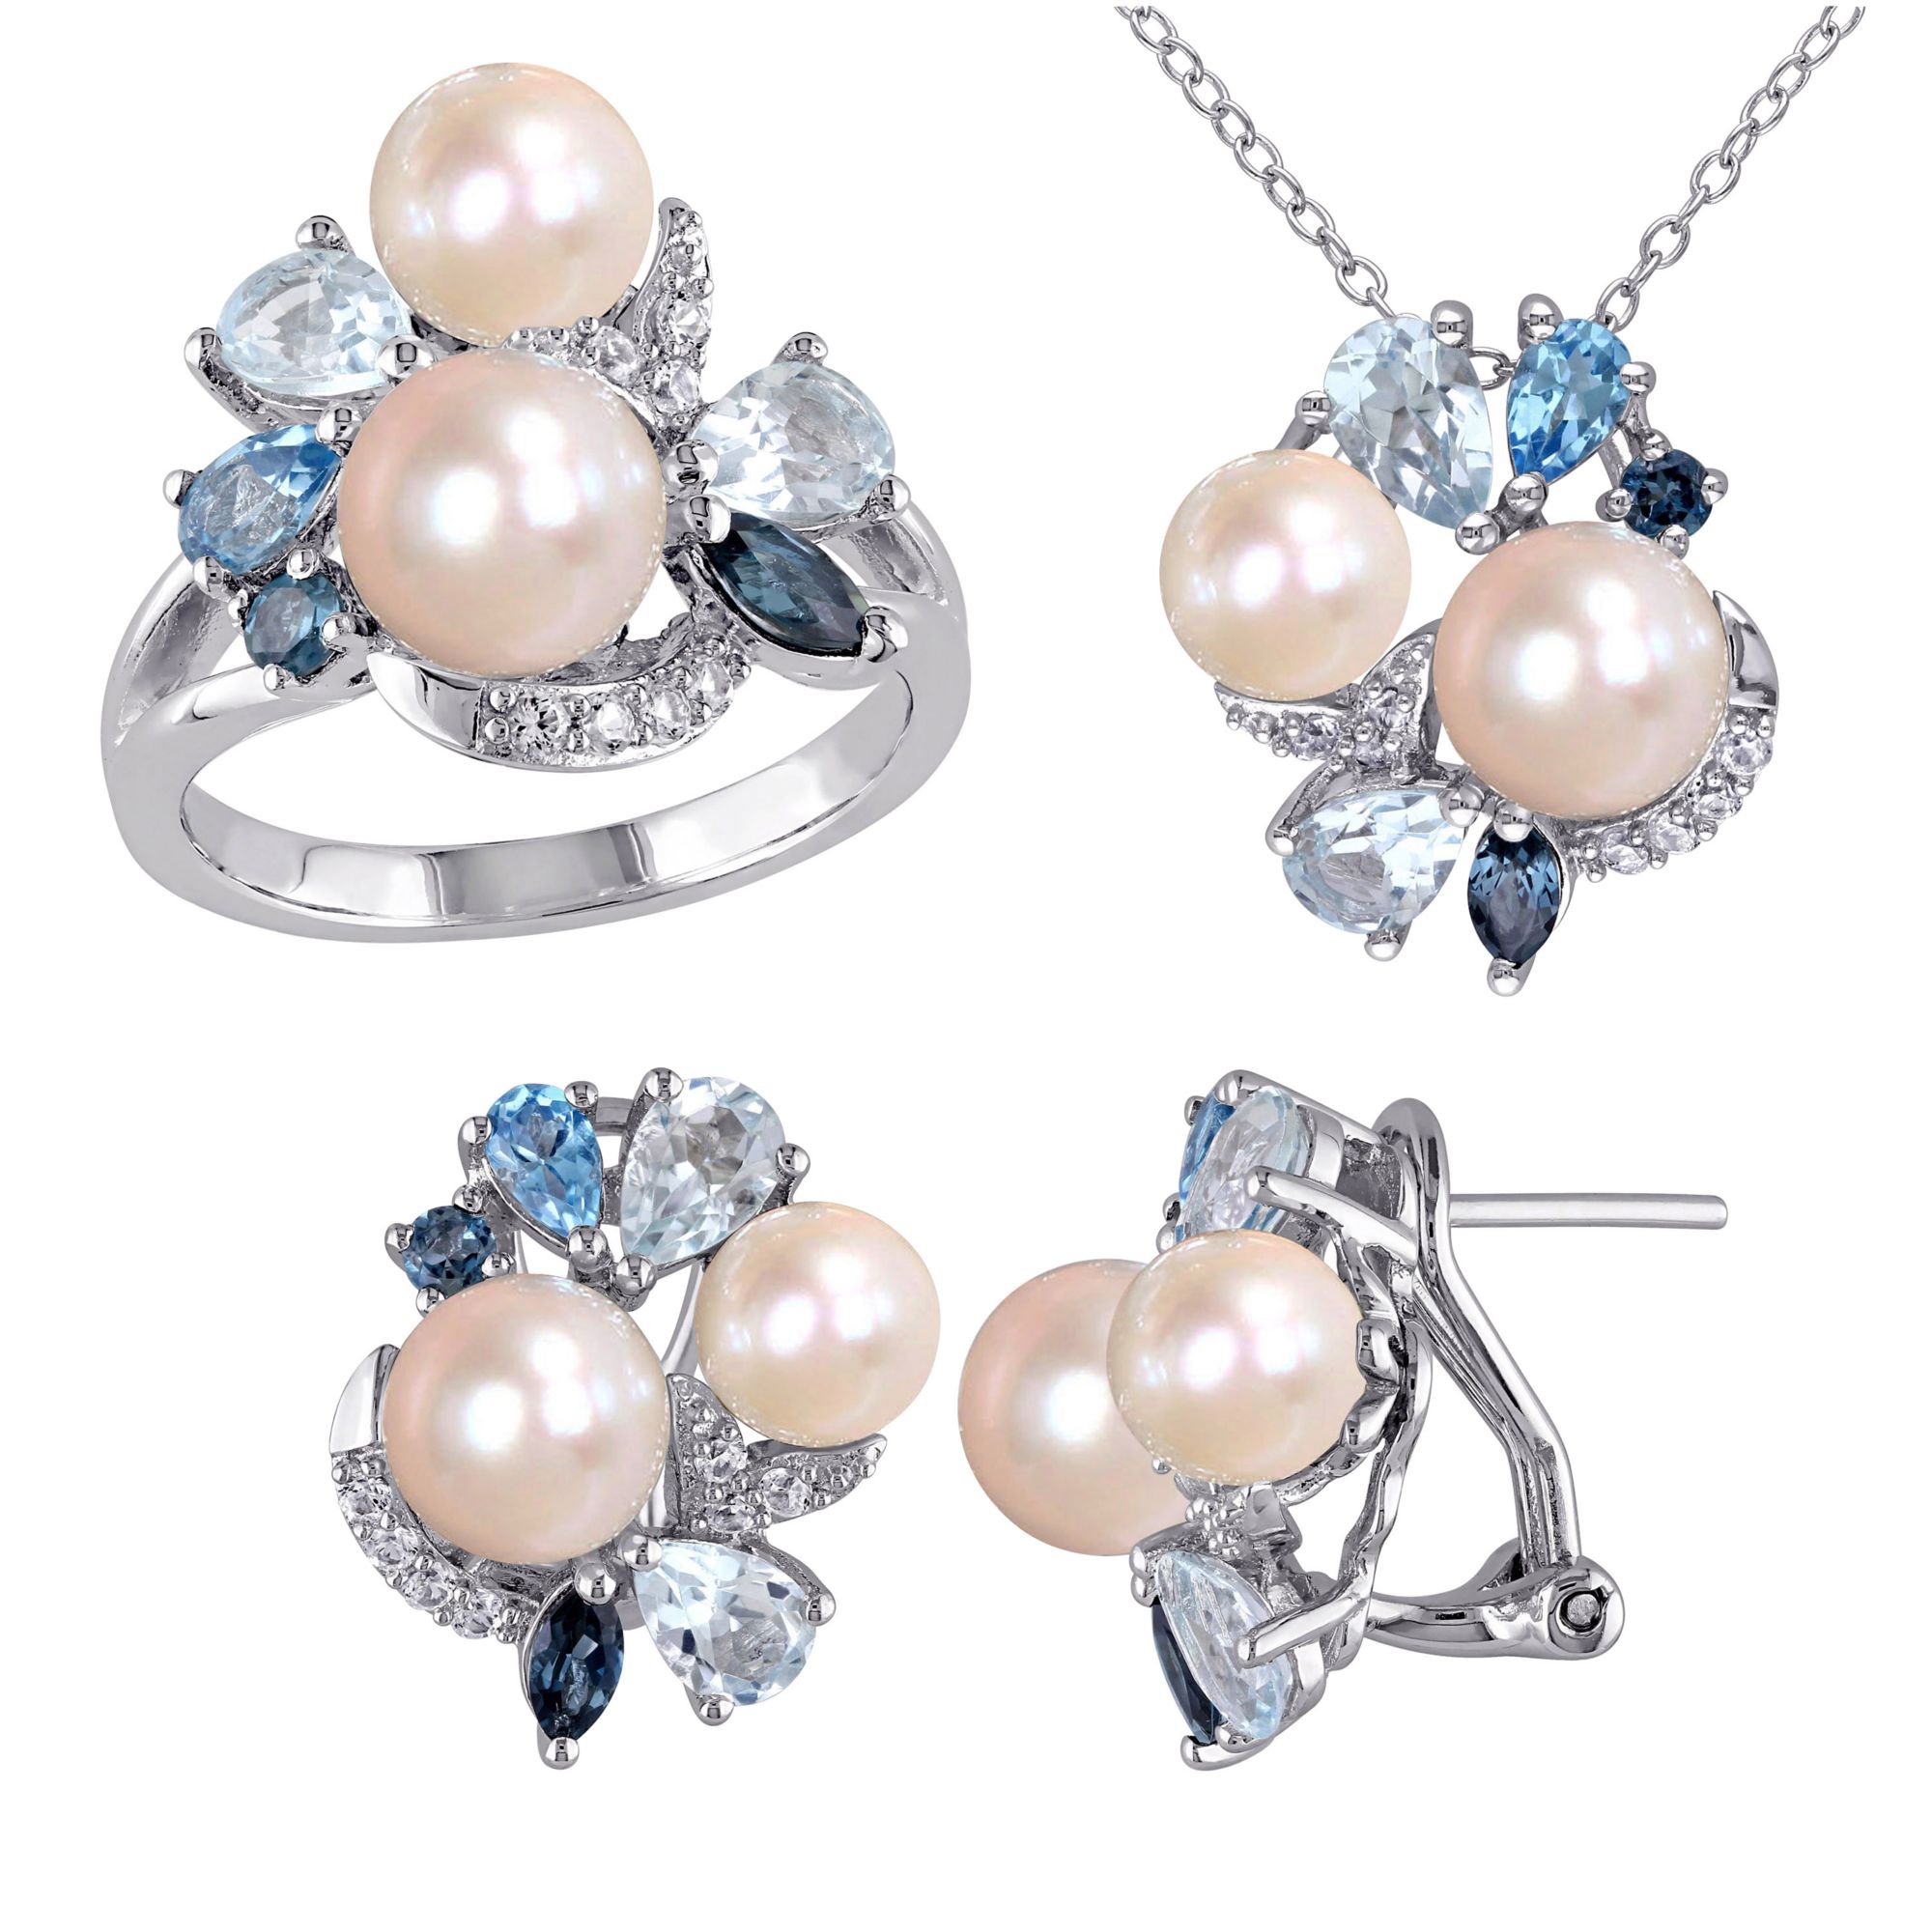 Cultured Pearl Set Necklace, Bracelet & Earrings Sterling Silver